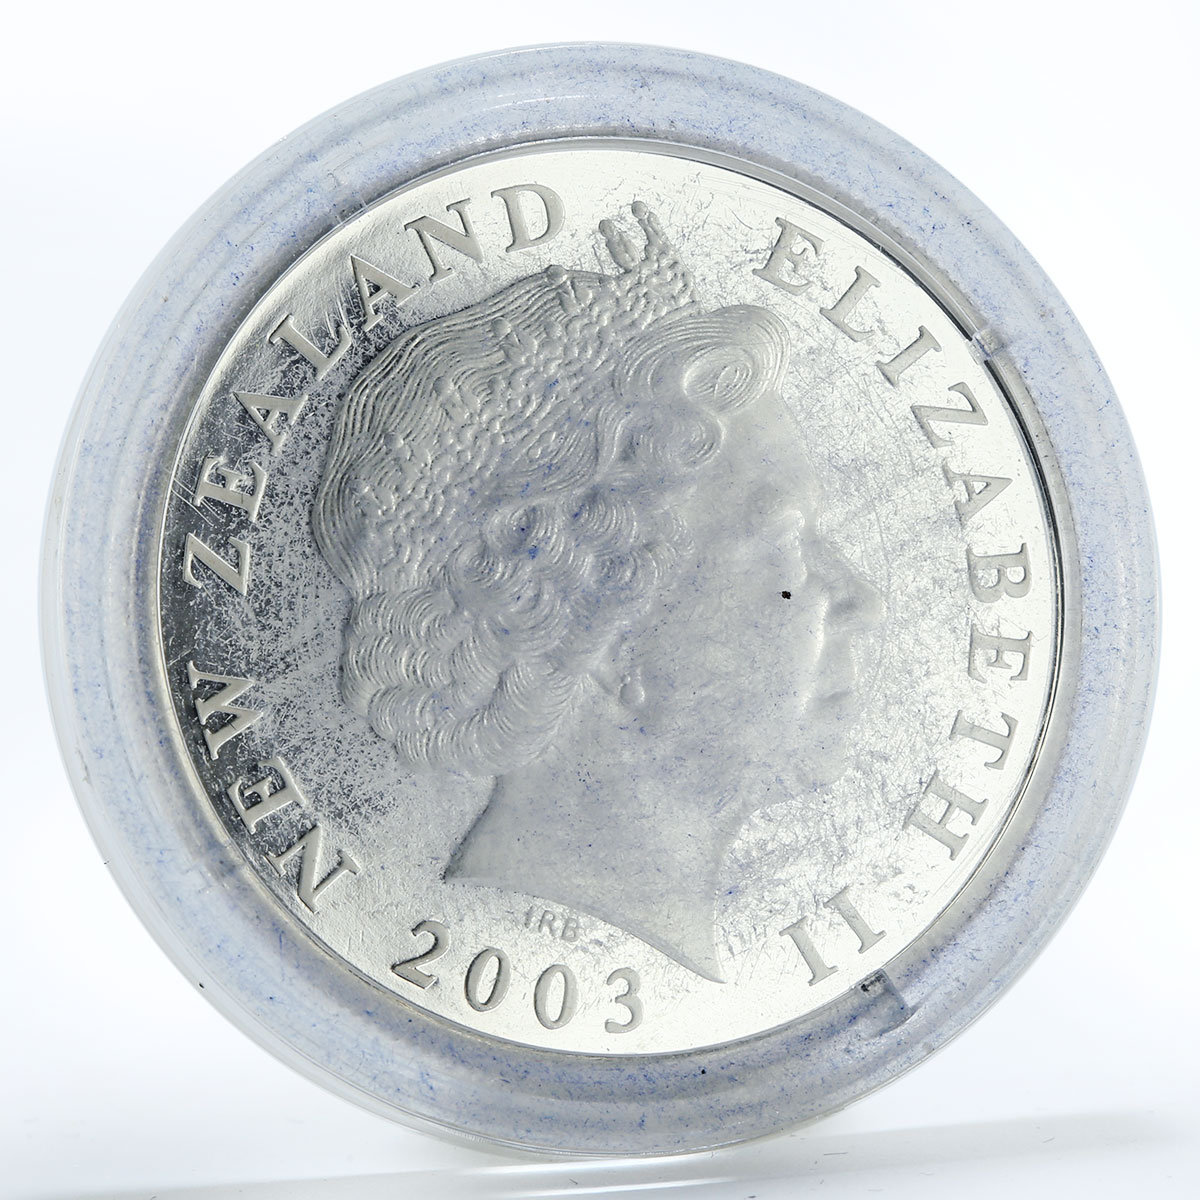 New Zealand 1 dollar Bridge of Kazad-Dum colored silver coin 2003